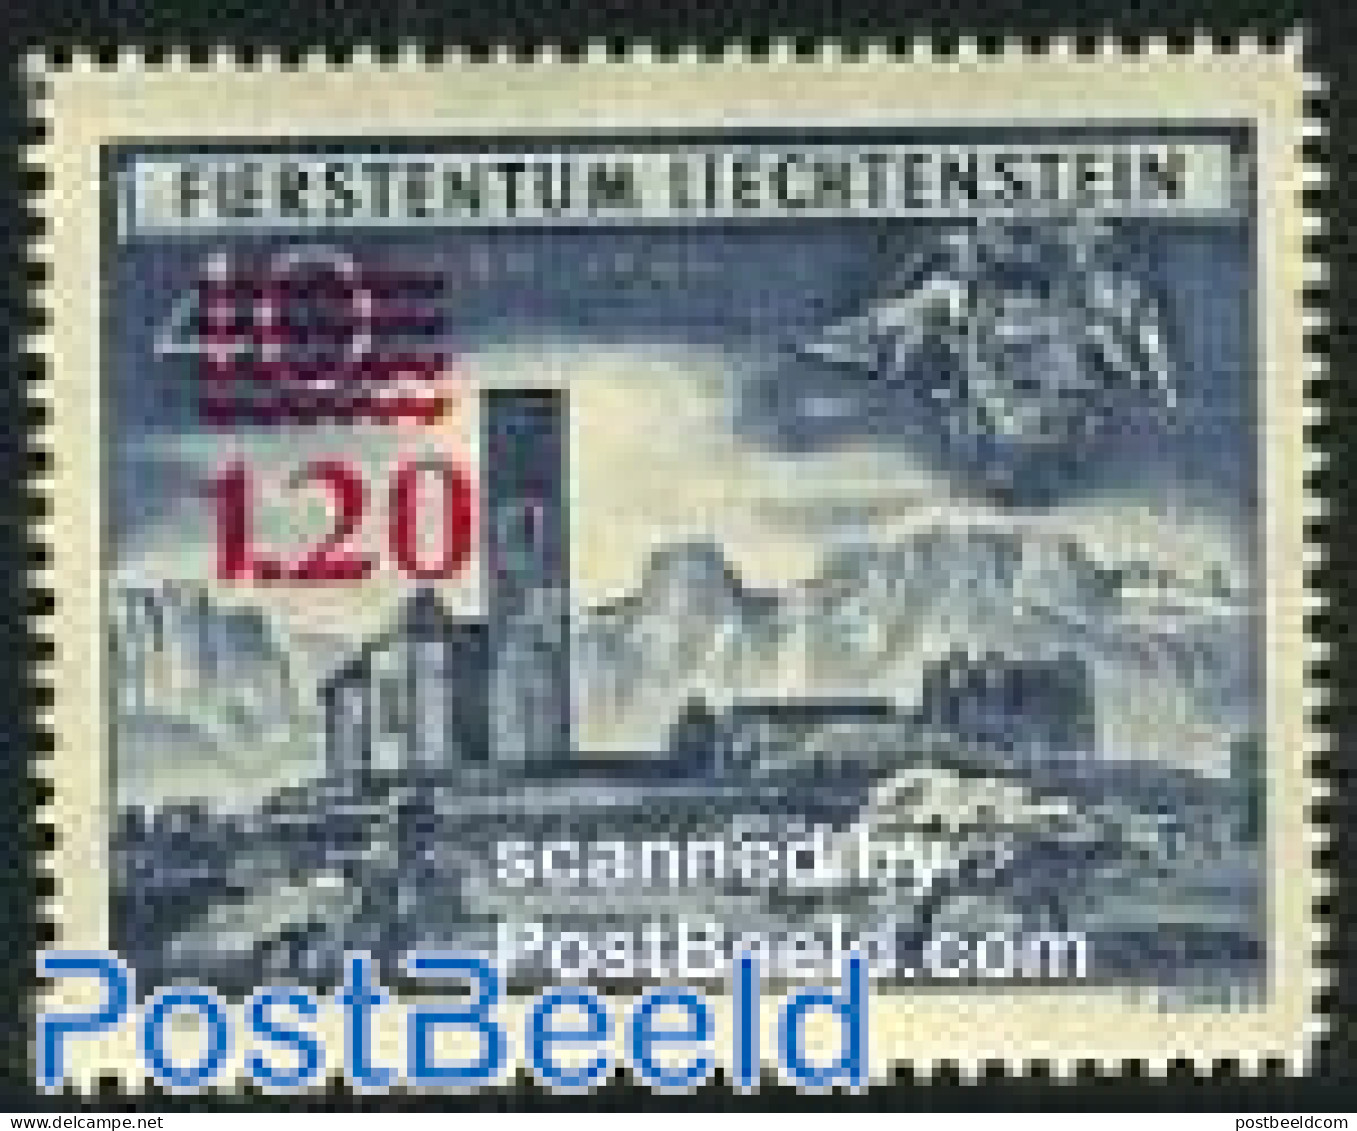 Liechtenstein 1952 Overprint 1v, Mint NH - Ungebraucht